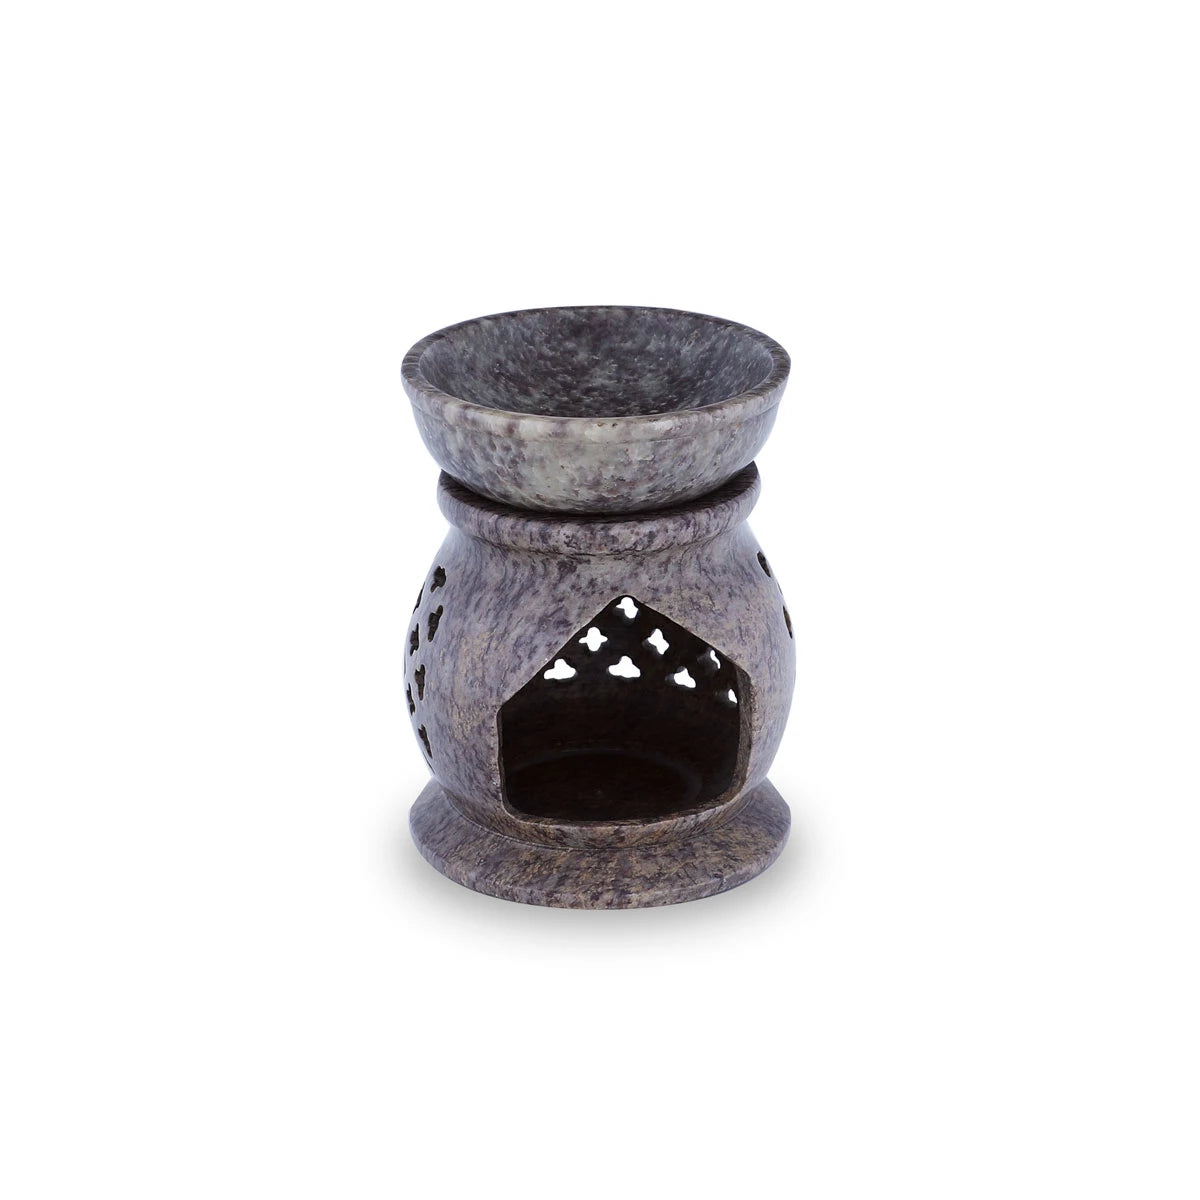 Normal View of Ceramic Stone Oil Burner